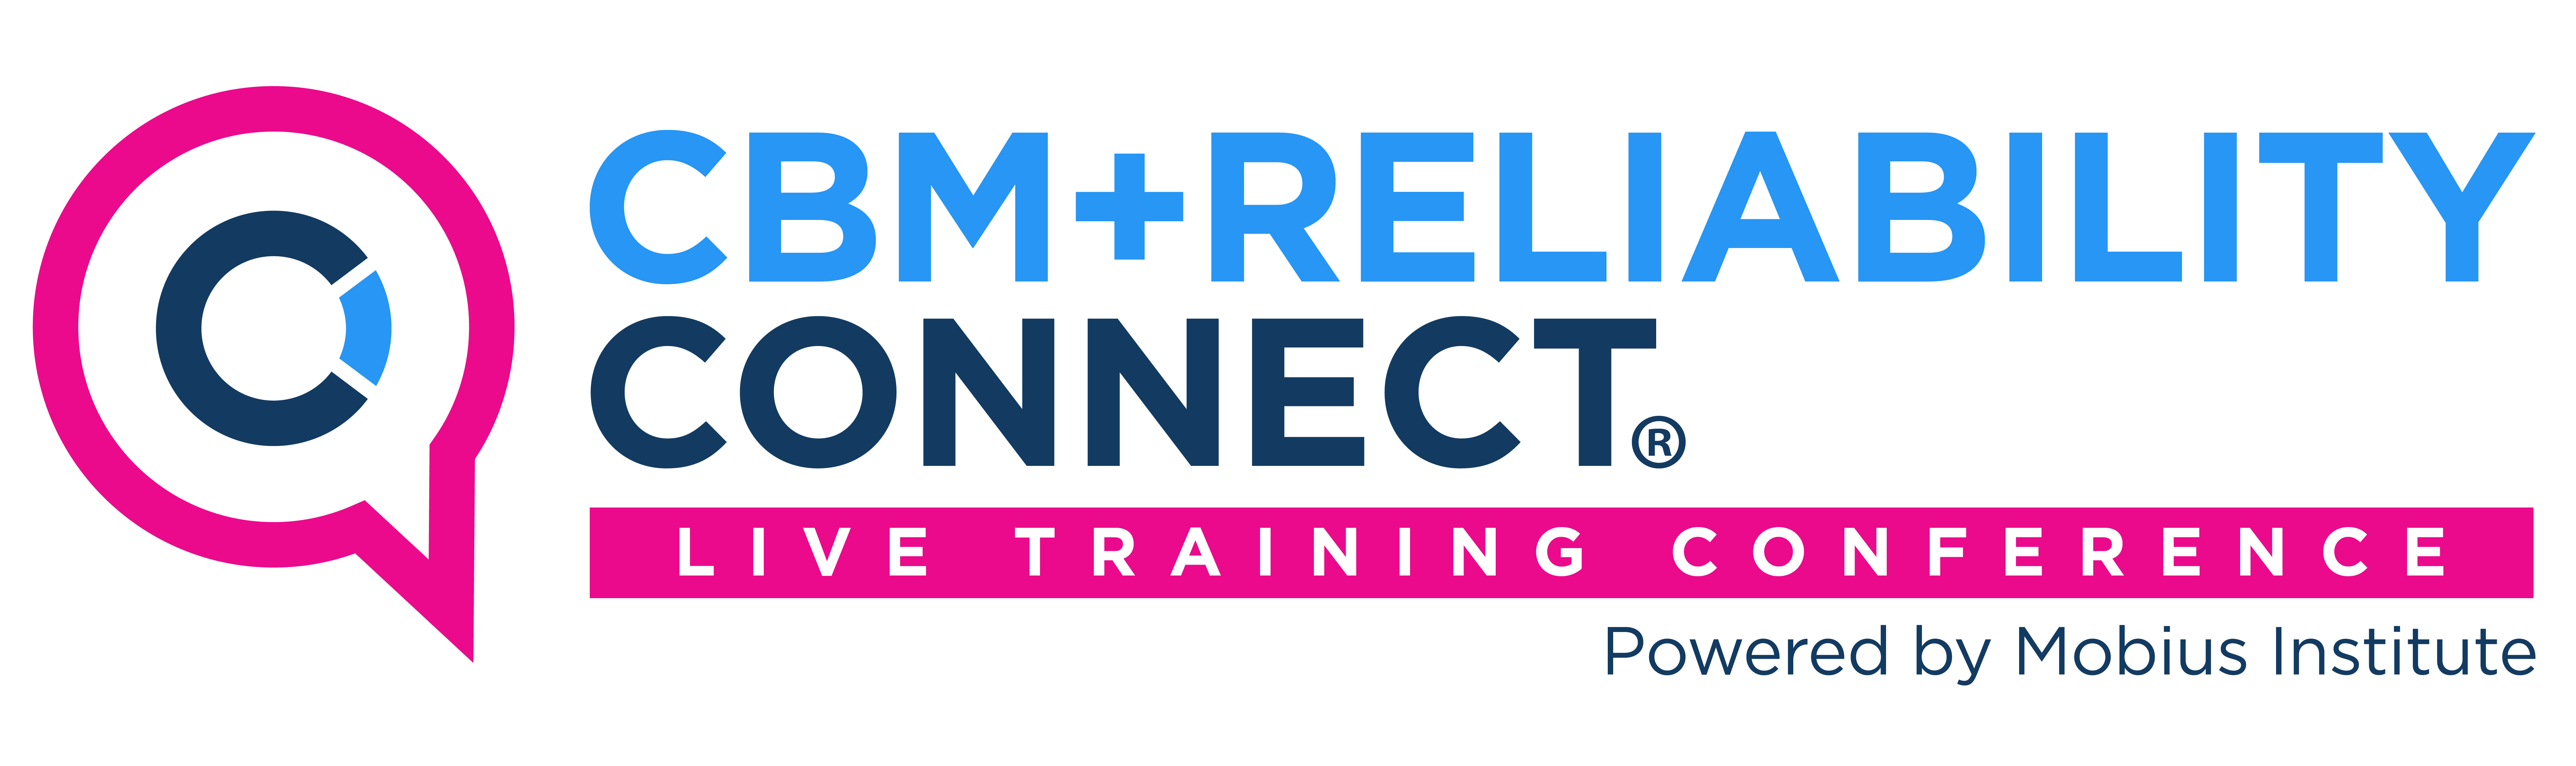 CBM+RELIABILITY CONNECT Conference Logo